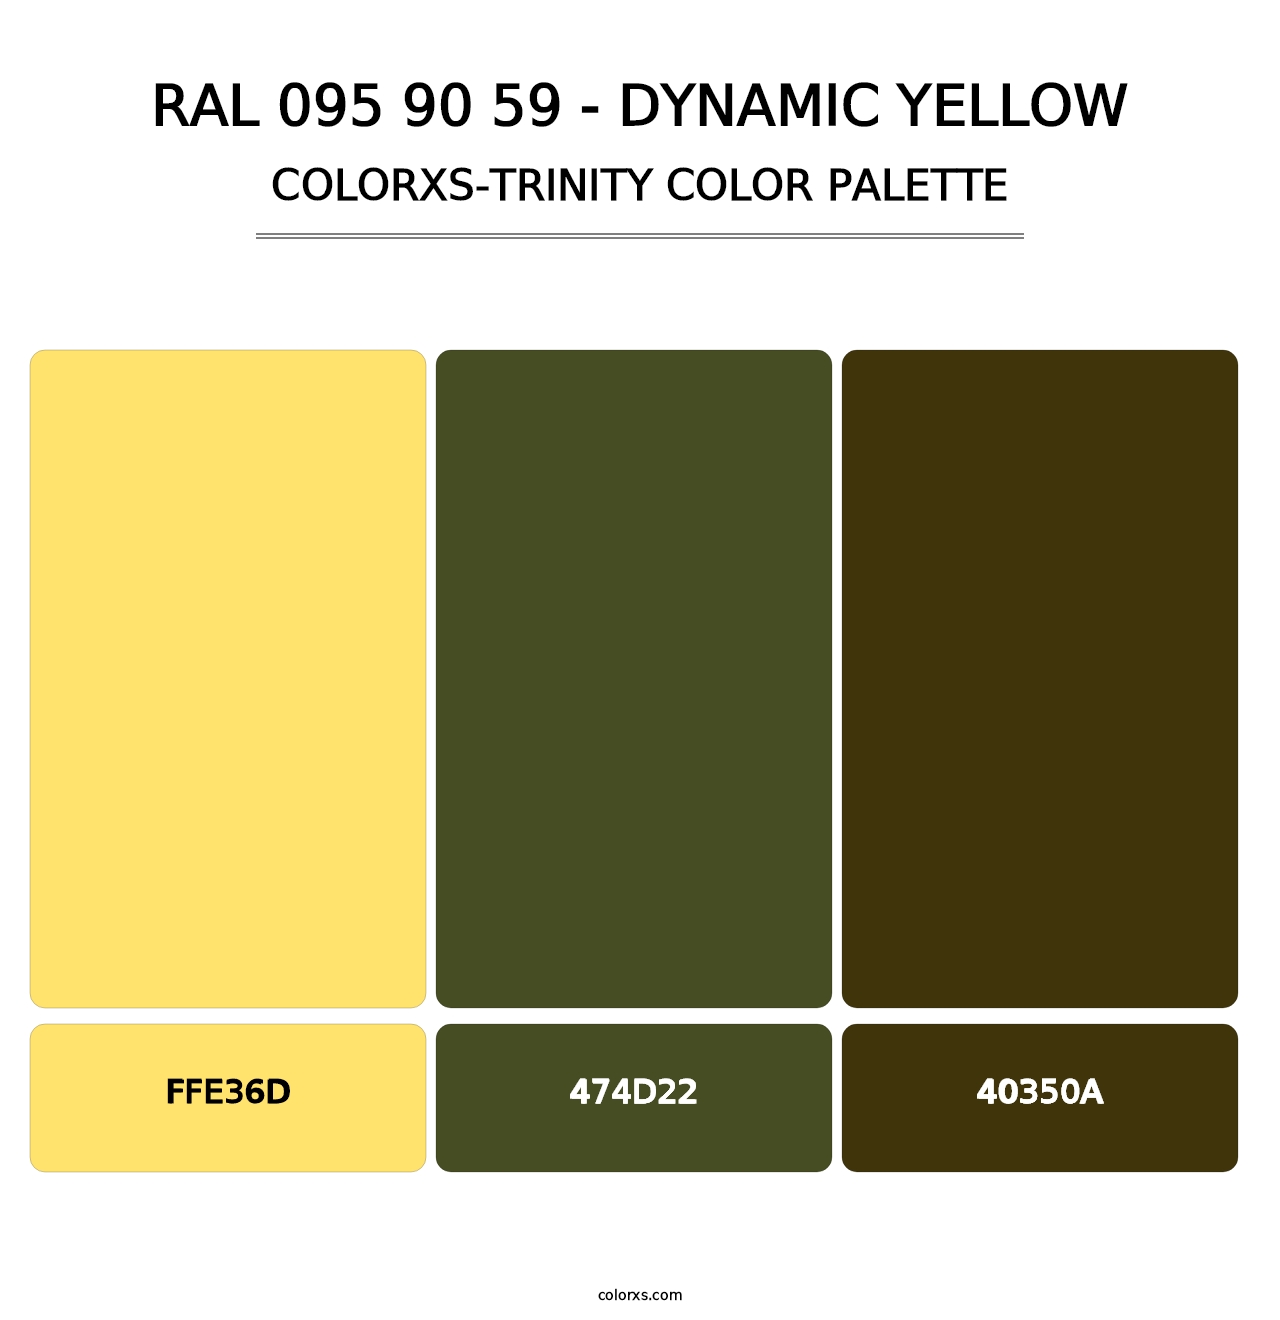 RAL 095 90 59 - Dynamic Yellow - Colorxs Trinity Palette